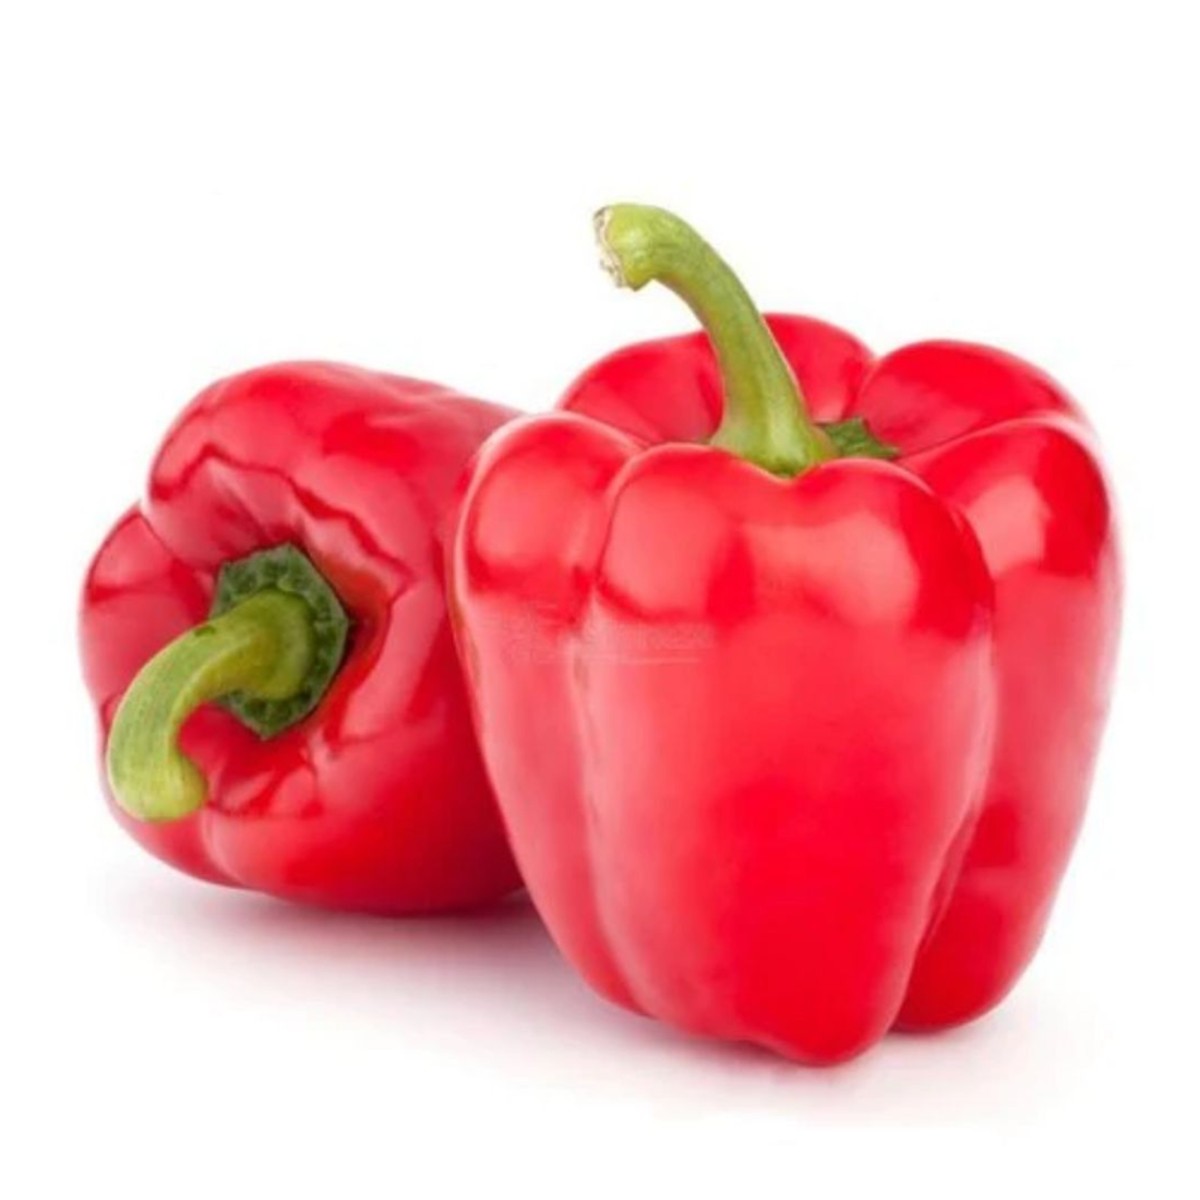 Lego 2 MOC City Mini Figures Tomato Or Red Bell Pepper Vegetable Stalk  Plants